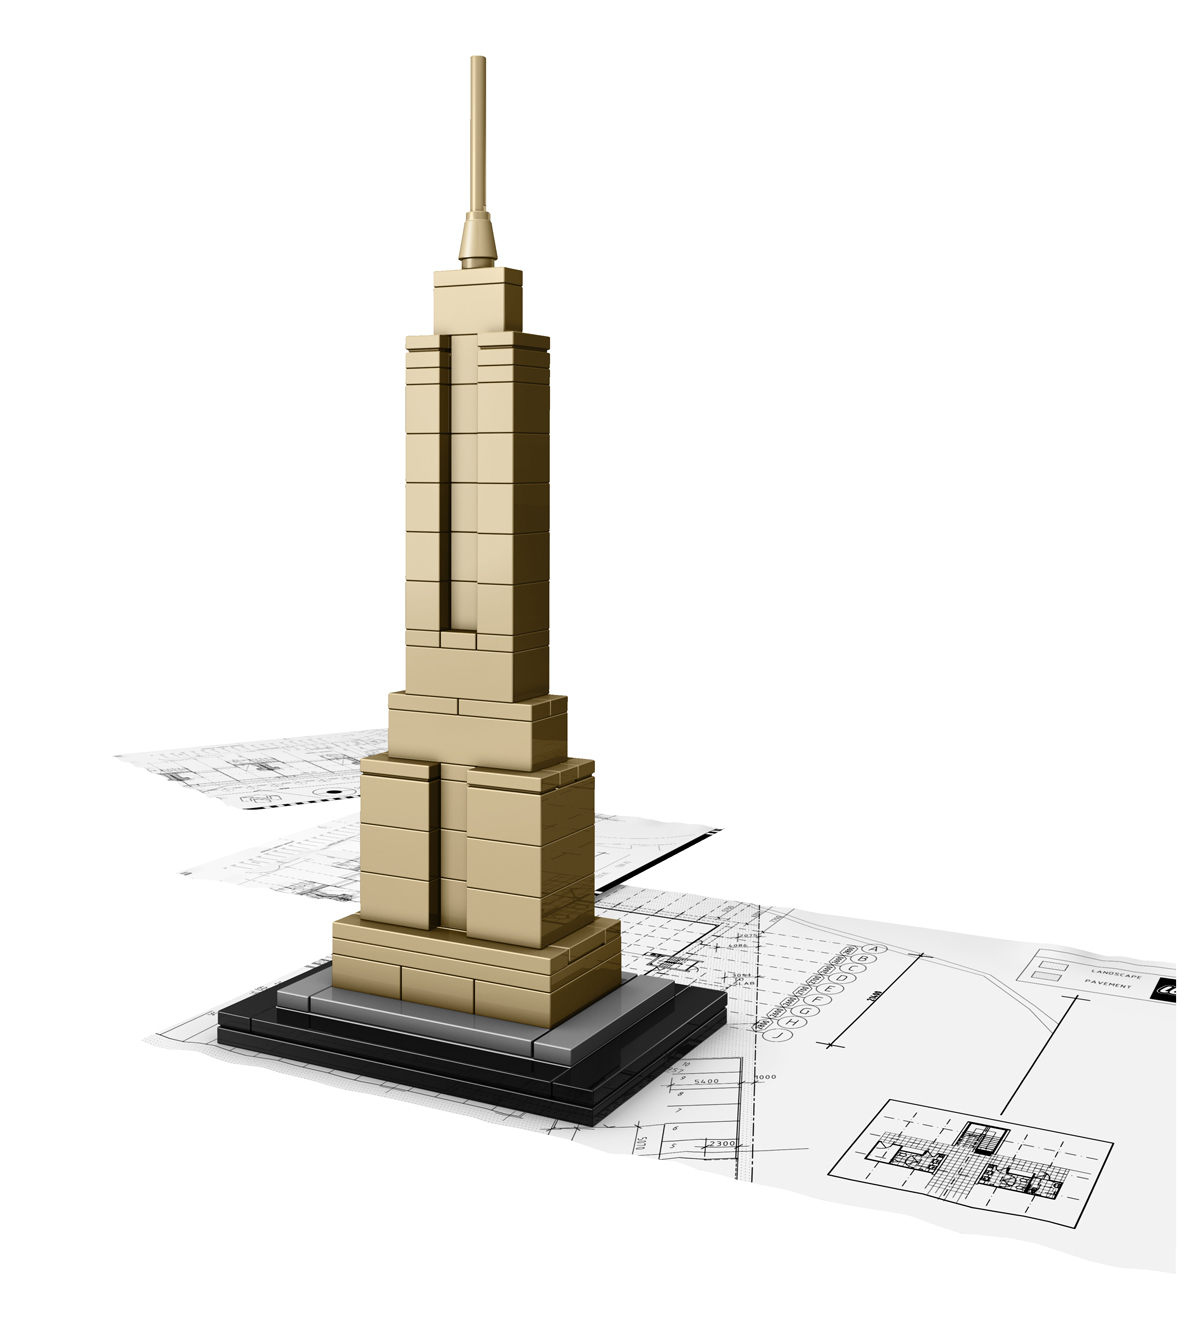 Boite de l'Empire State Building de Gregory Johnson, New York, États-Unis - Artiste : Adam Reed Tucker - Collection LEGO Architecture